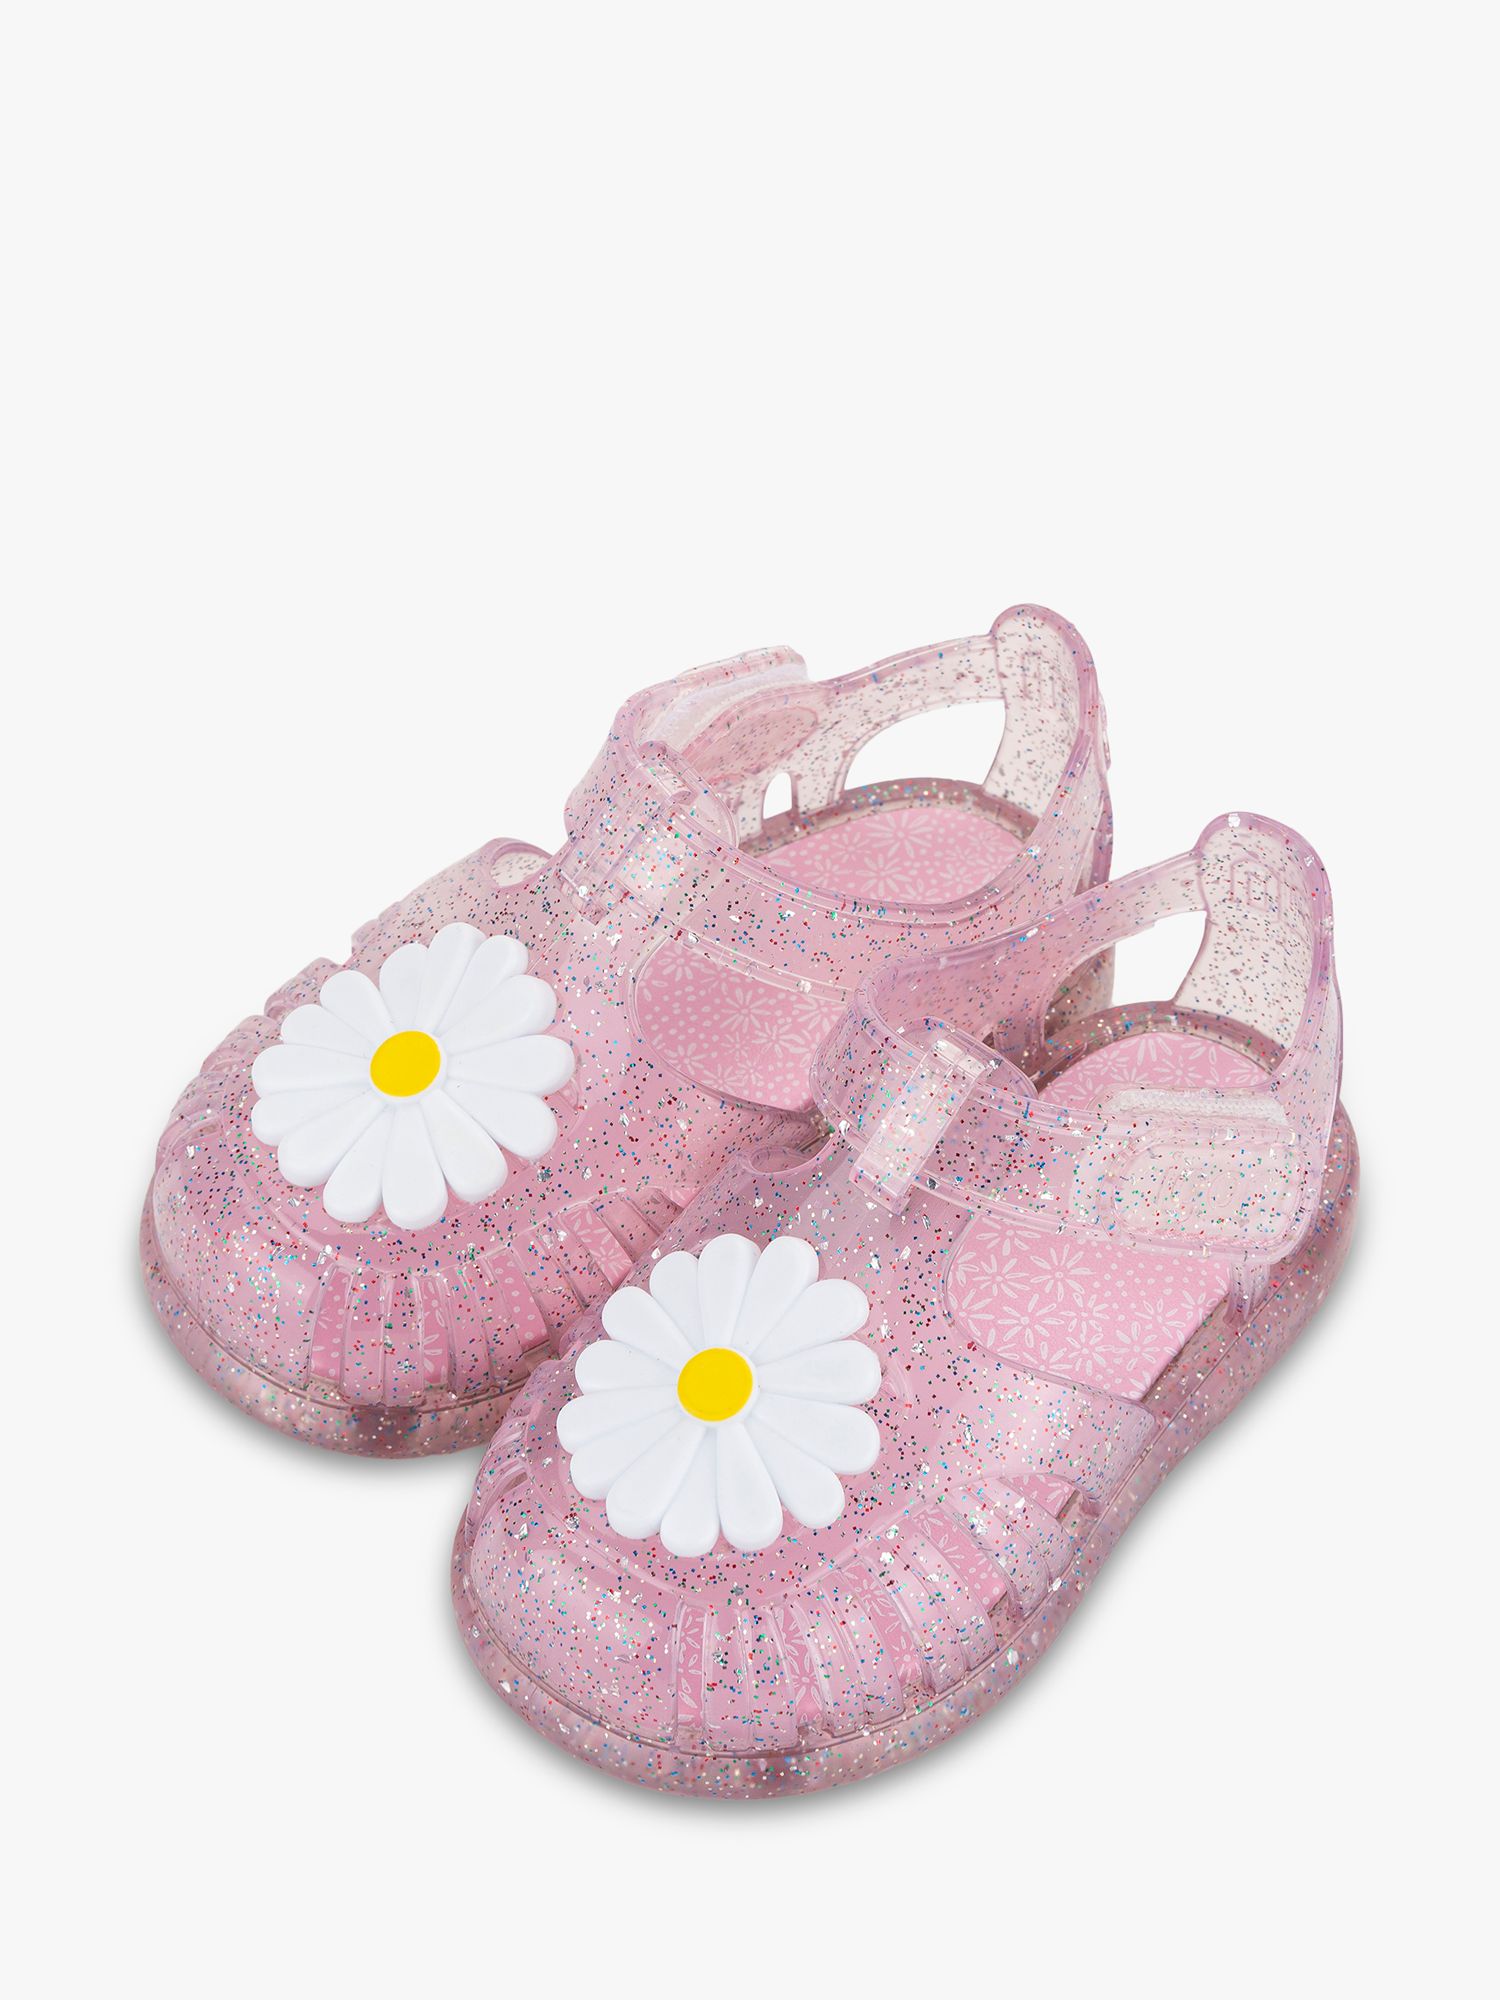 IGOR Kids' Tobby Gloss Glitter Floral Jelly Sandals, Pink, 20